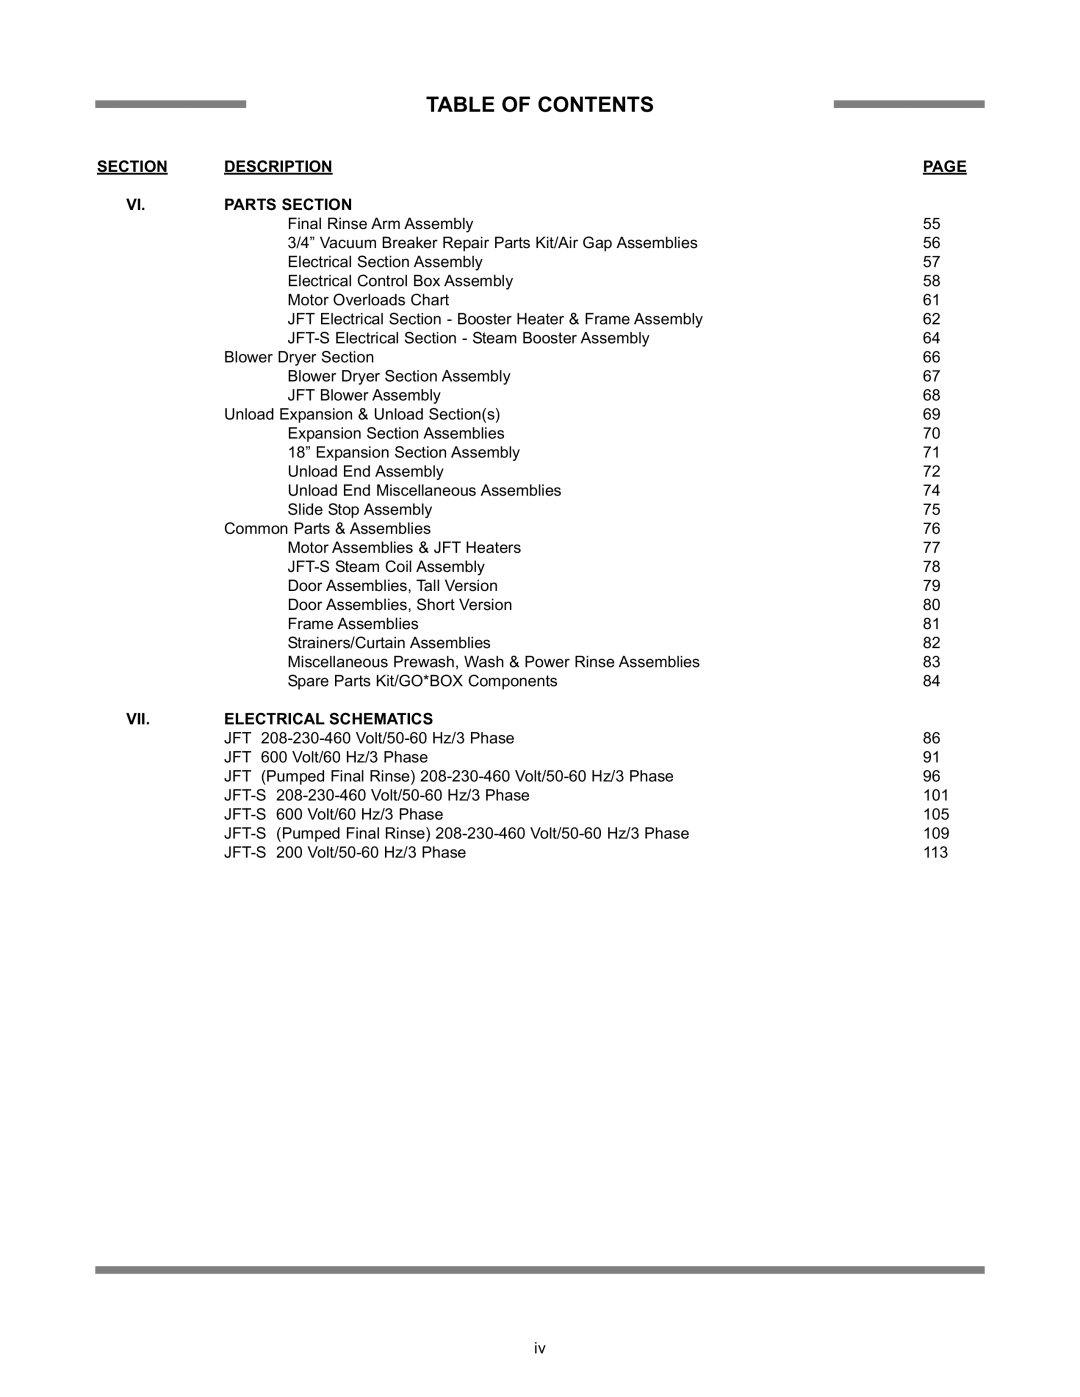 Jackson JFT-S technical manual Table Of Contents, Description, Page, Parts Section, Electrical Schematics 